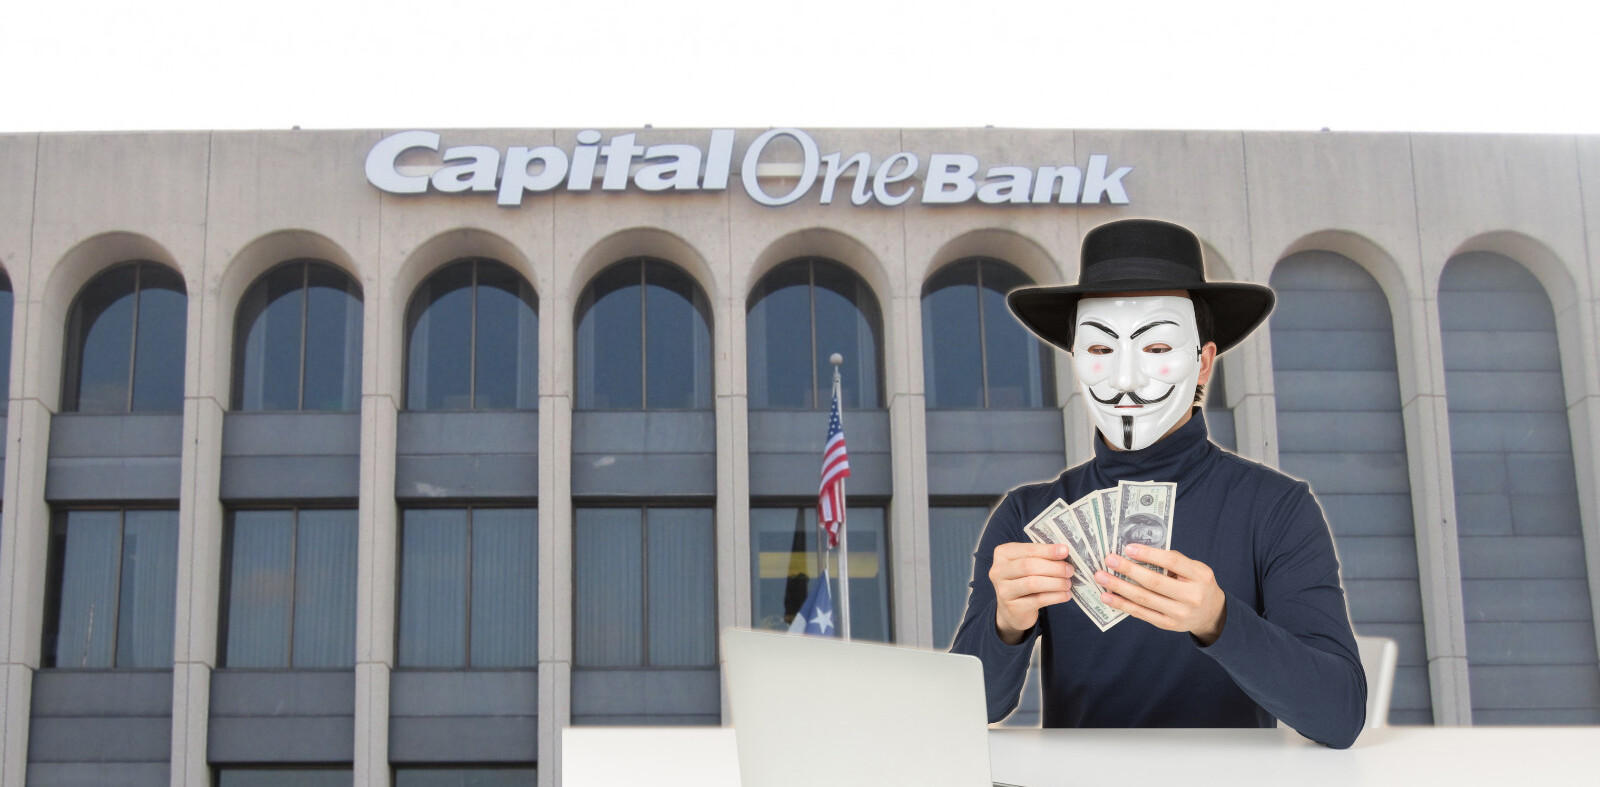 Ex-Amazon employee who hacked Capital One bank used its servers to mine cryptocurrency